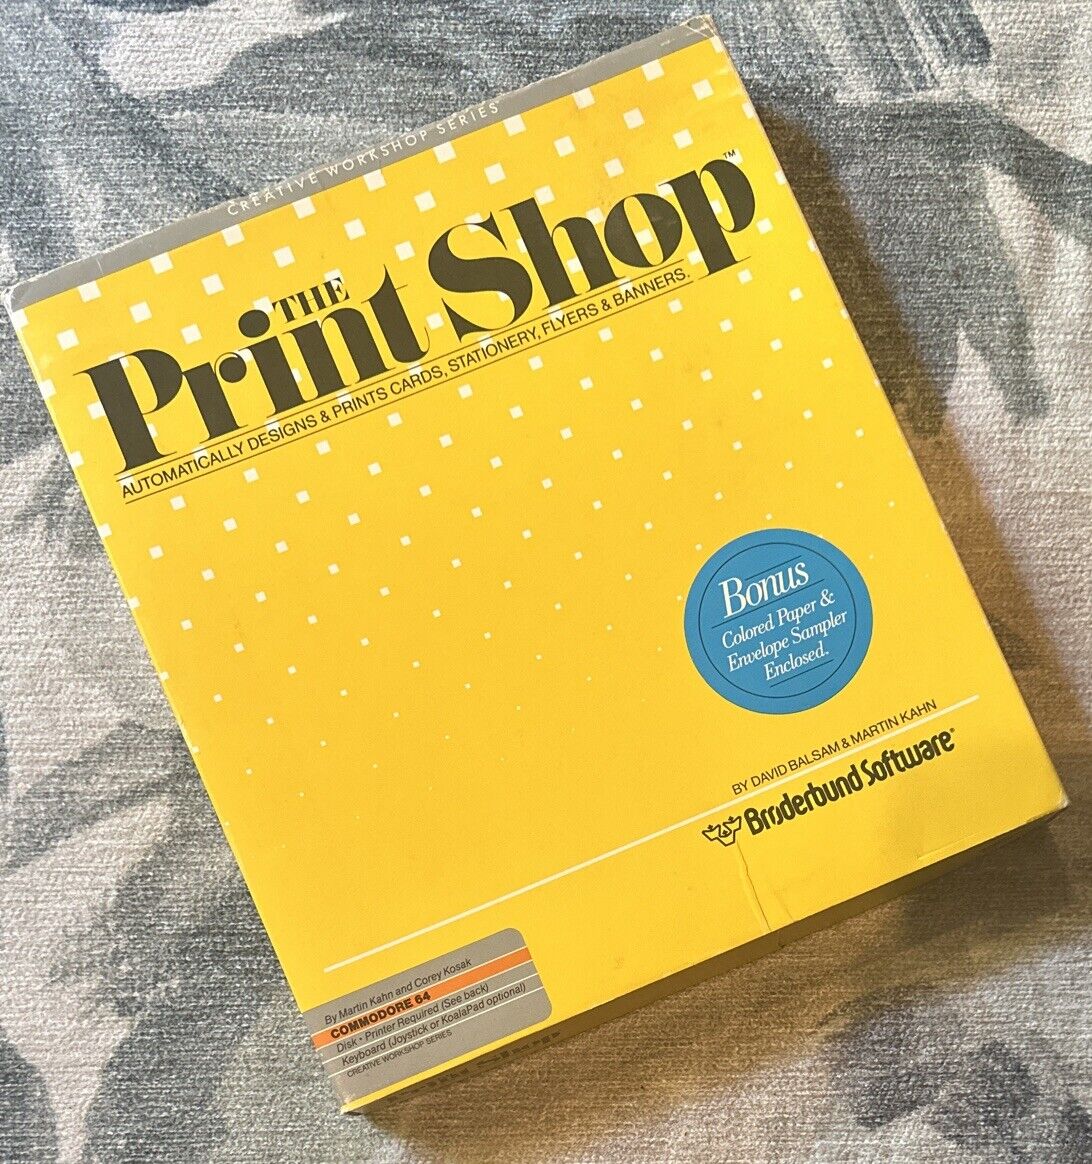 The Print Shop Broderbund Print Shop for Commodore 64